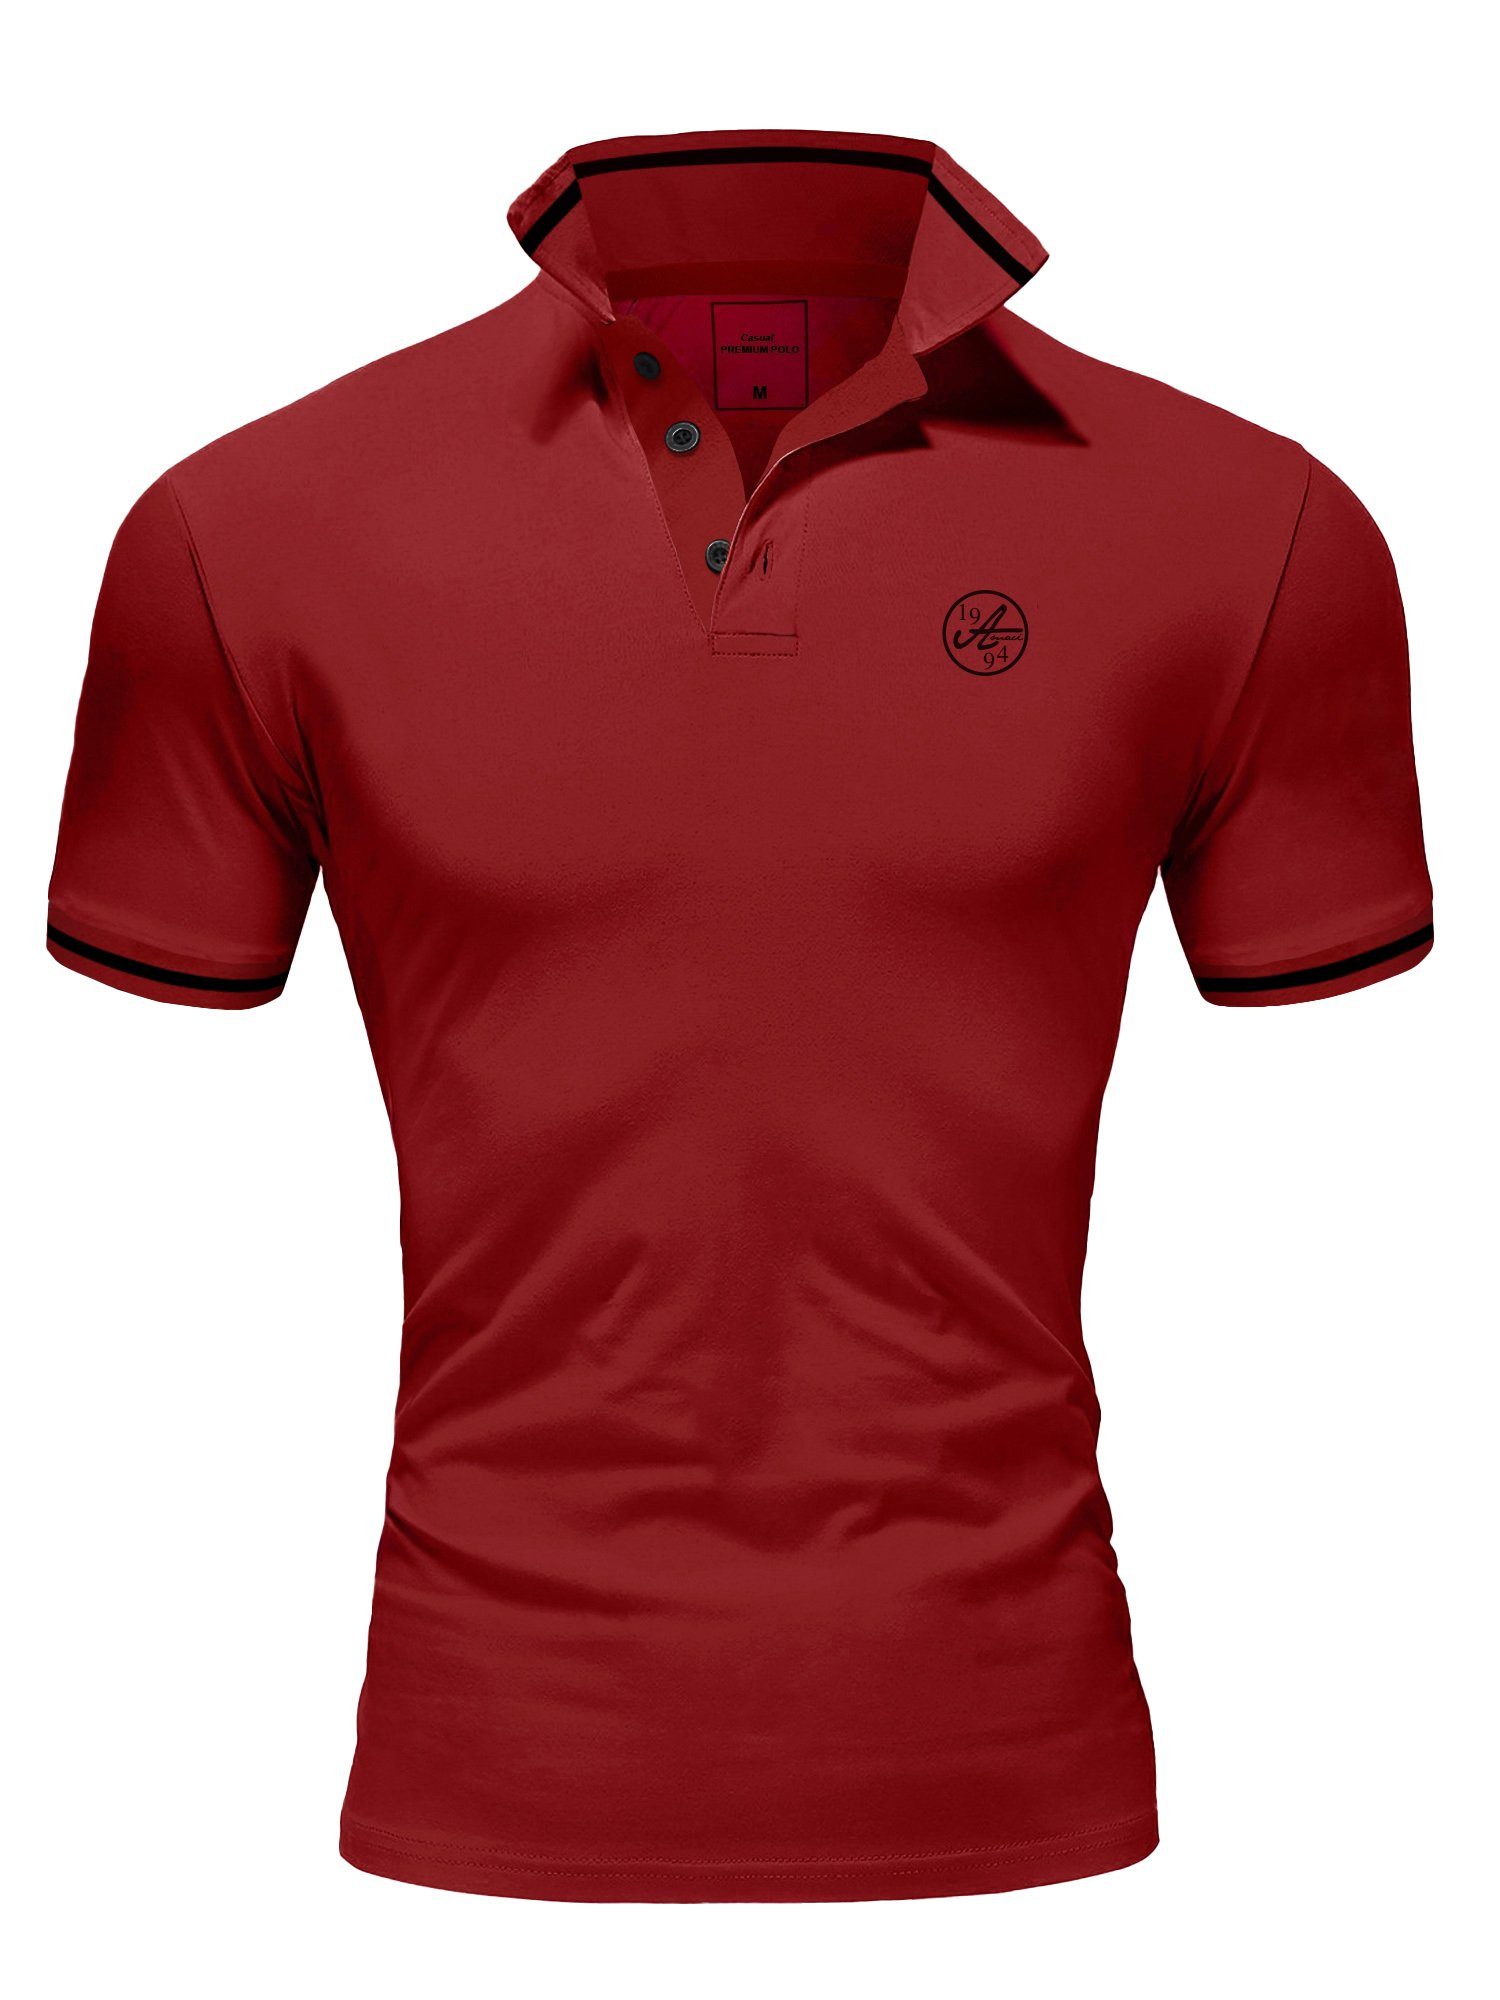 Amaci&Sons Poloshirt MACON Herren Basic T-Shirt Kontrast Polohemd Stickerei Bordeaux/Schwarz Kurzarm